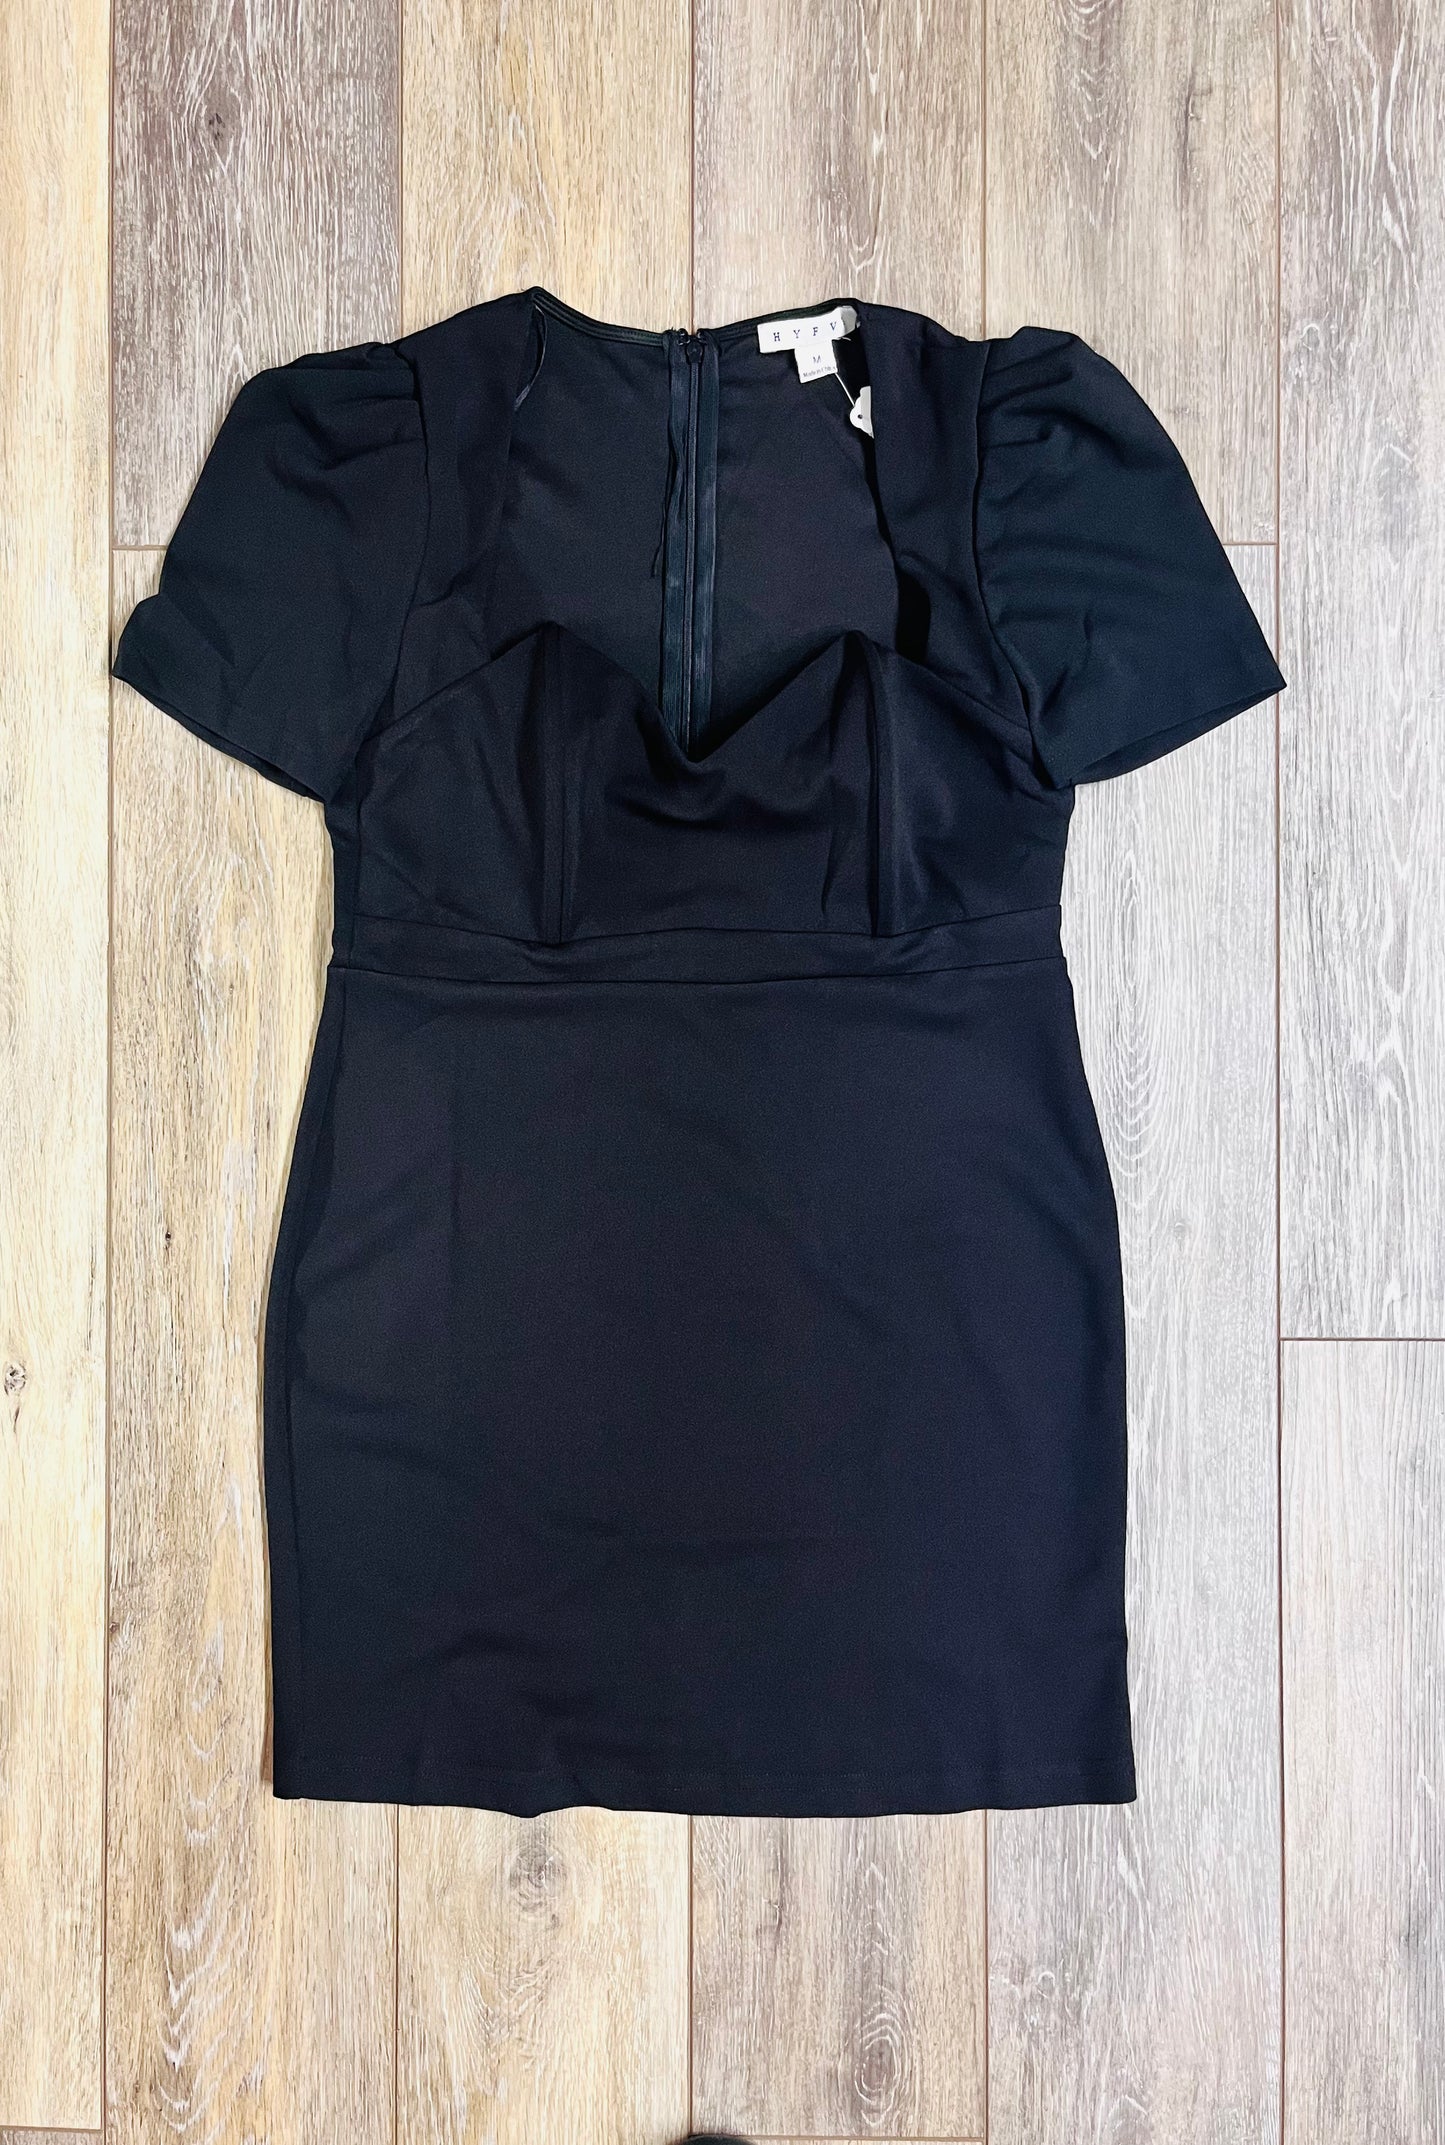 Black Bodycon Dress was $42.90